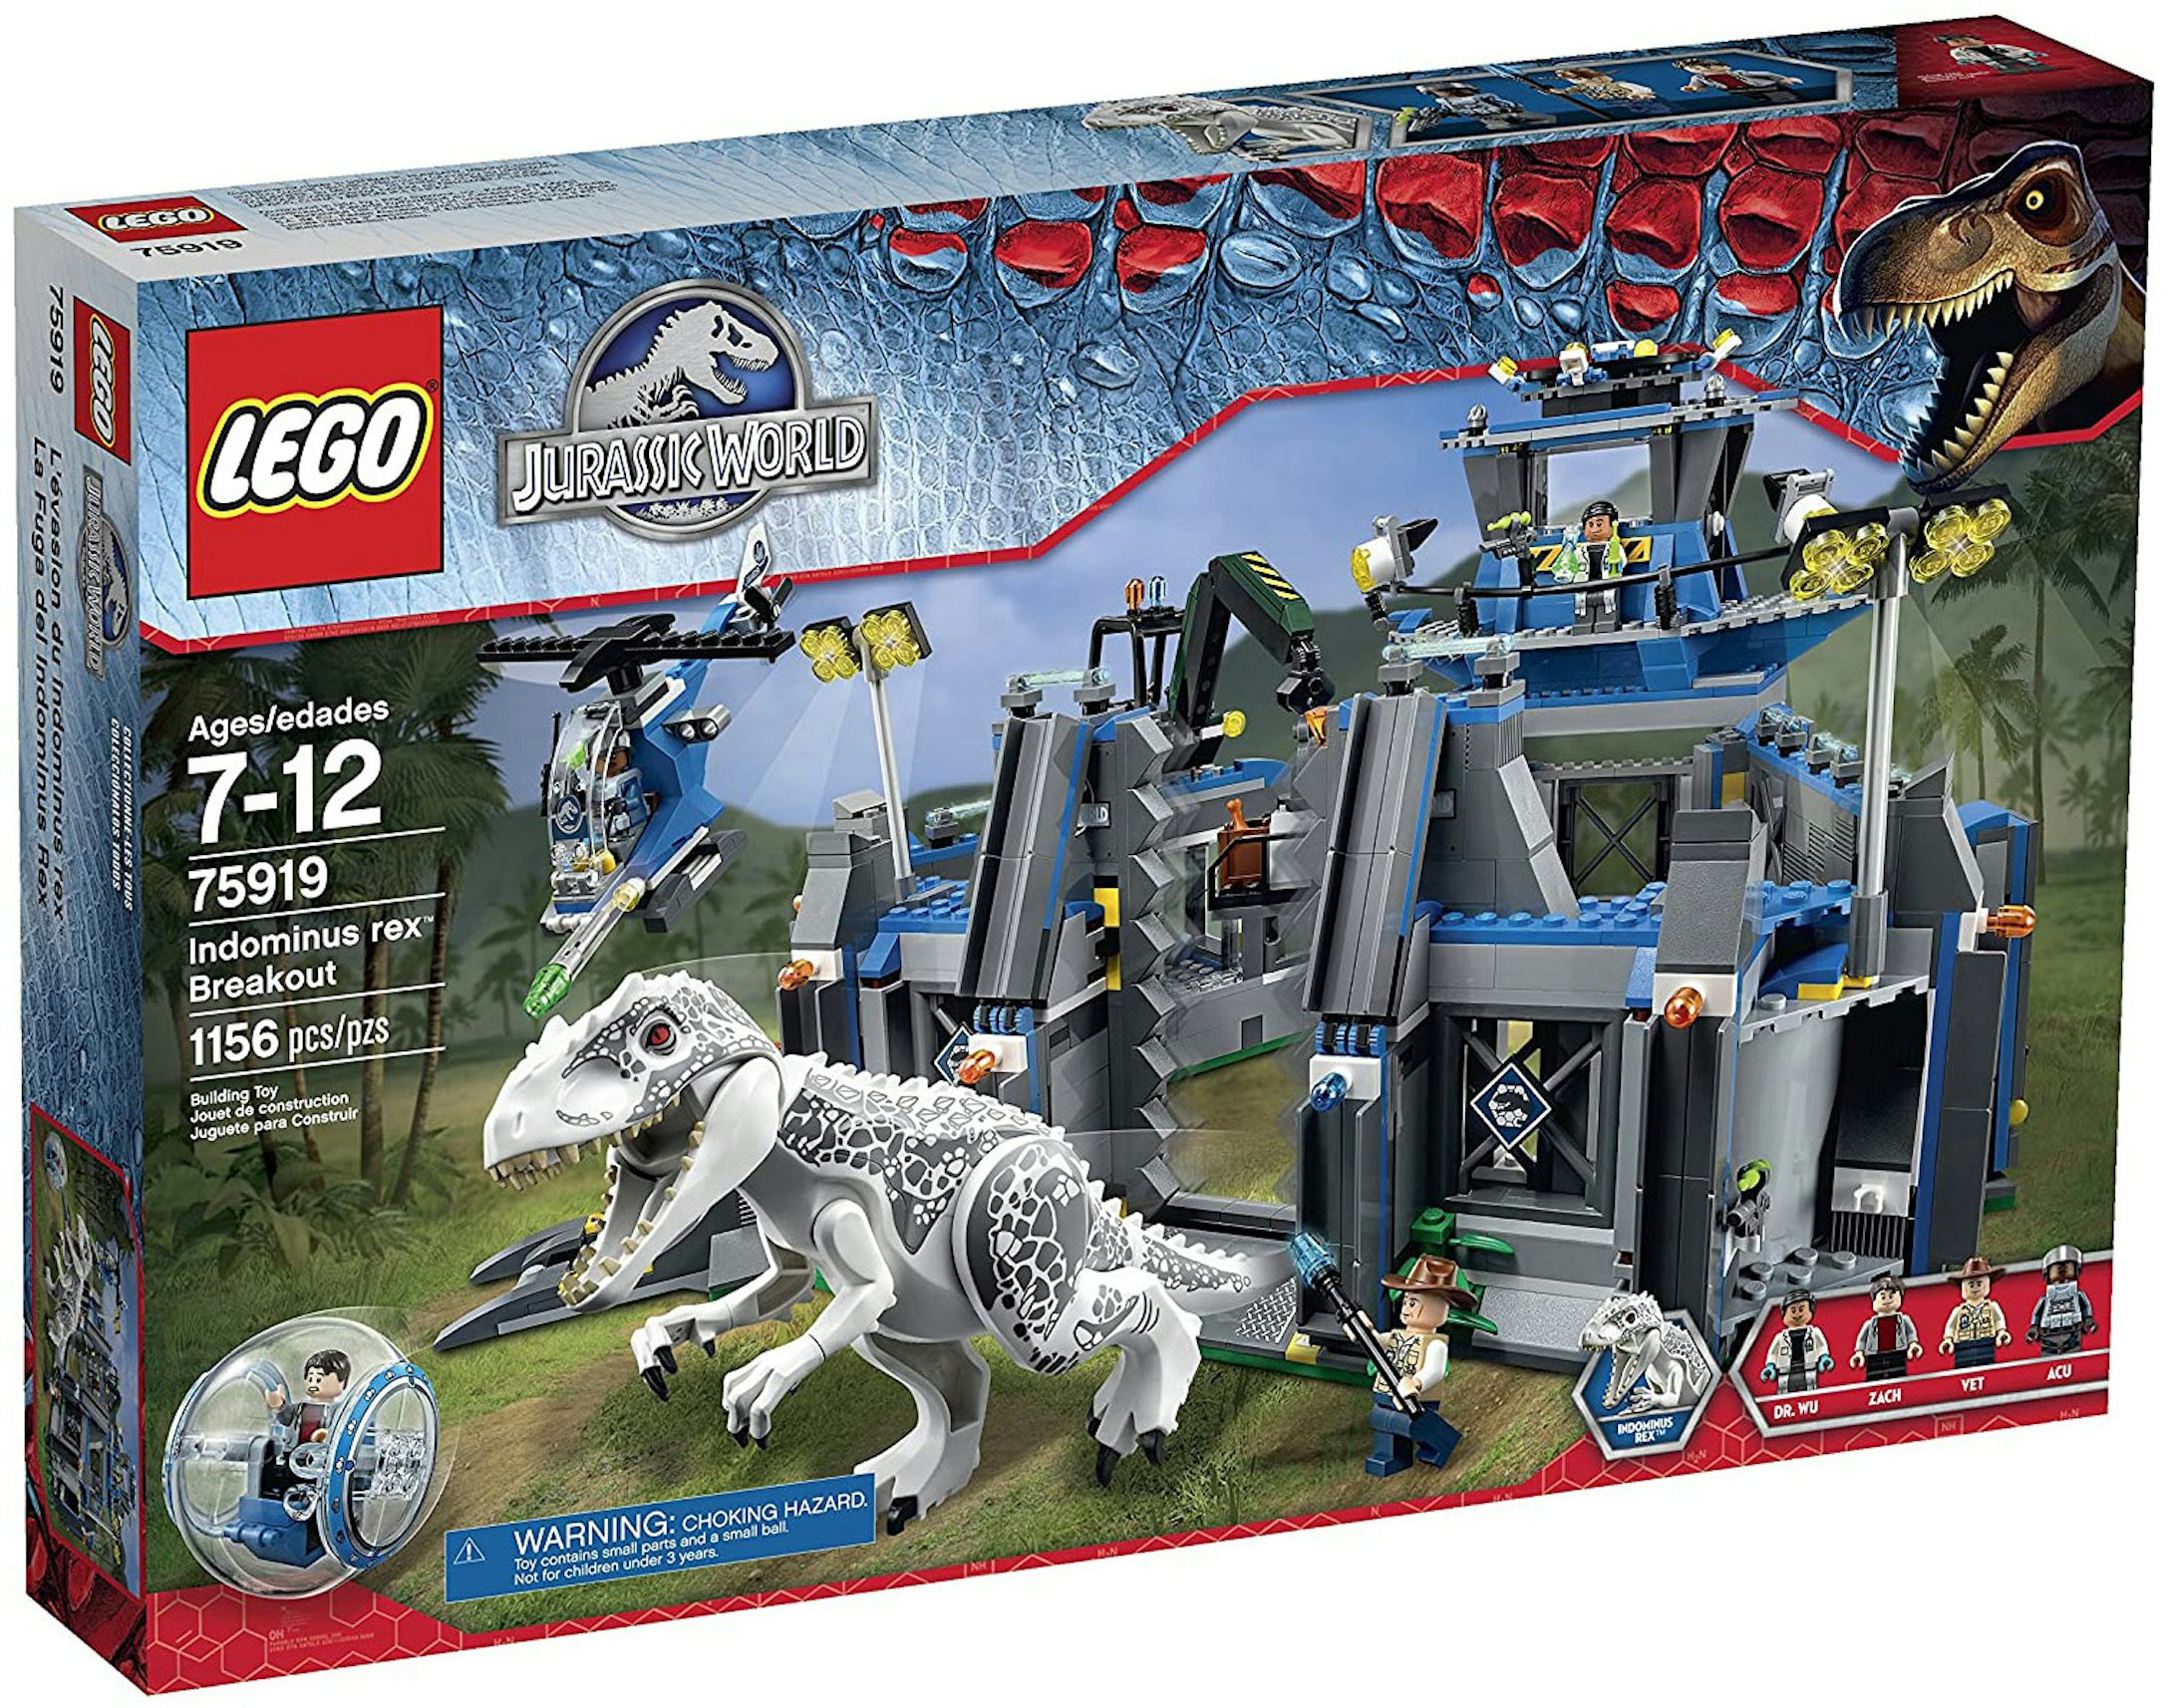 LEGO Jurassic World T. rex vs Dino-Mech Battle Set 75938 - GB